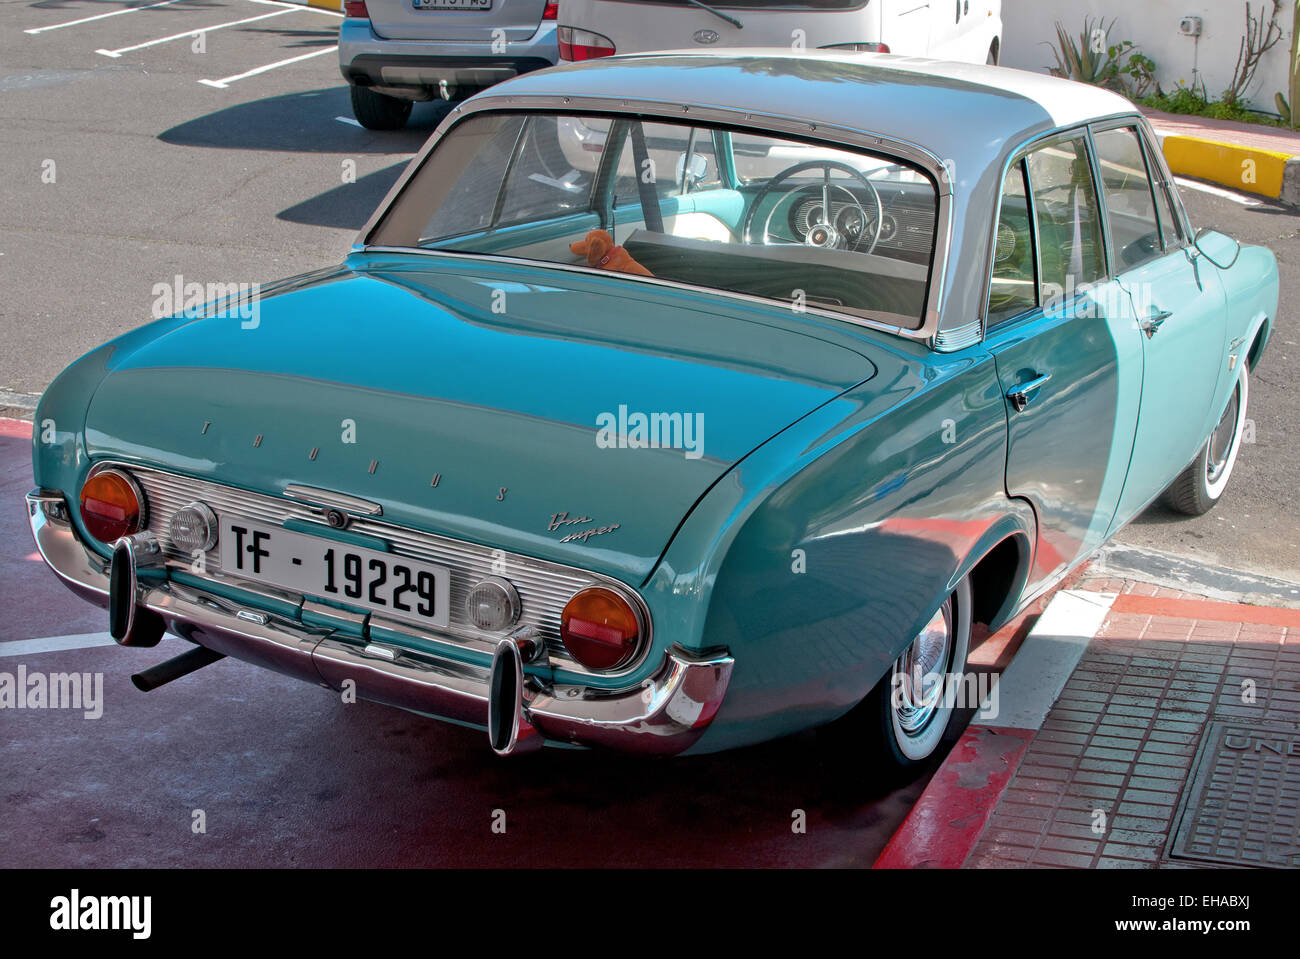 Ford taunus 17m p3 -Fotos und -Bildmaterial in hoher Auflösung – Alamy